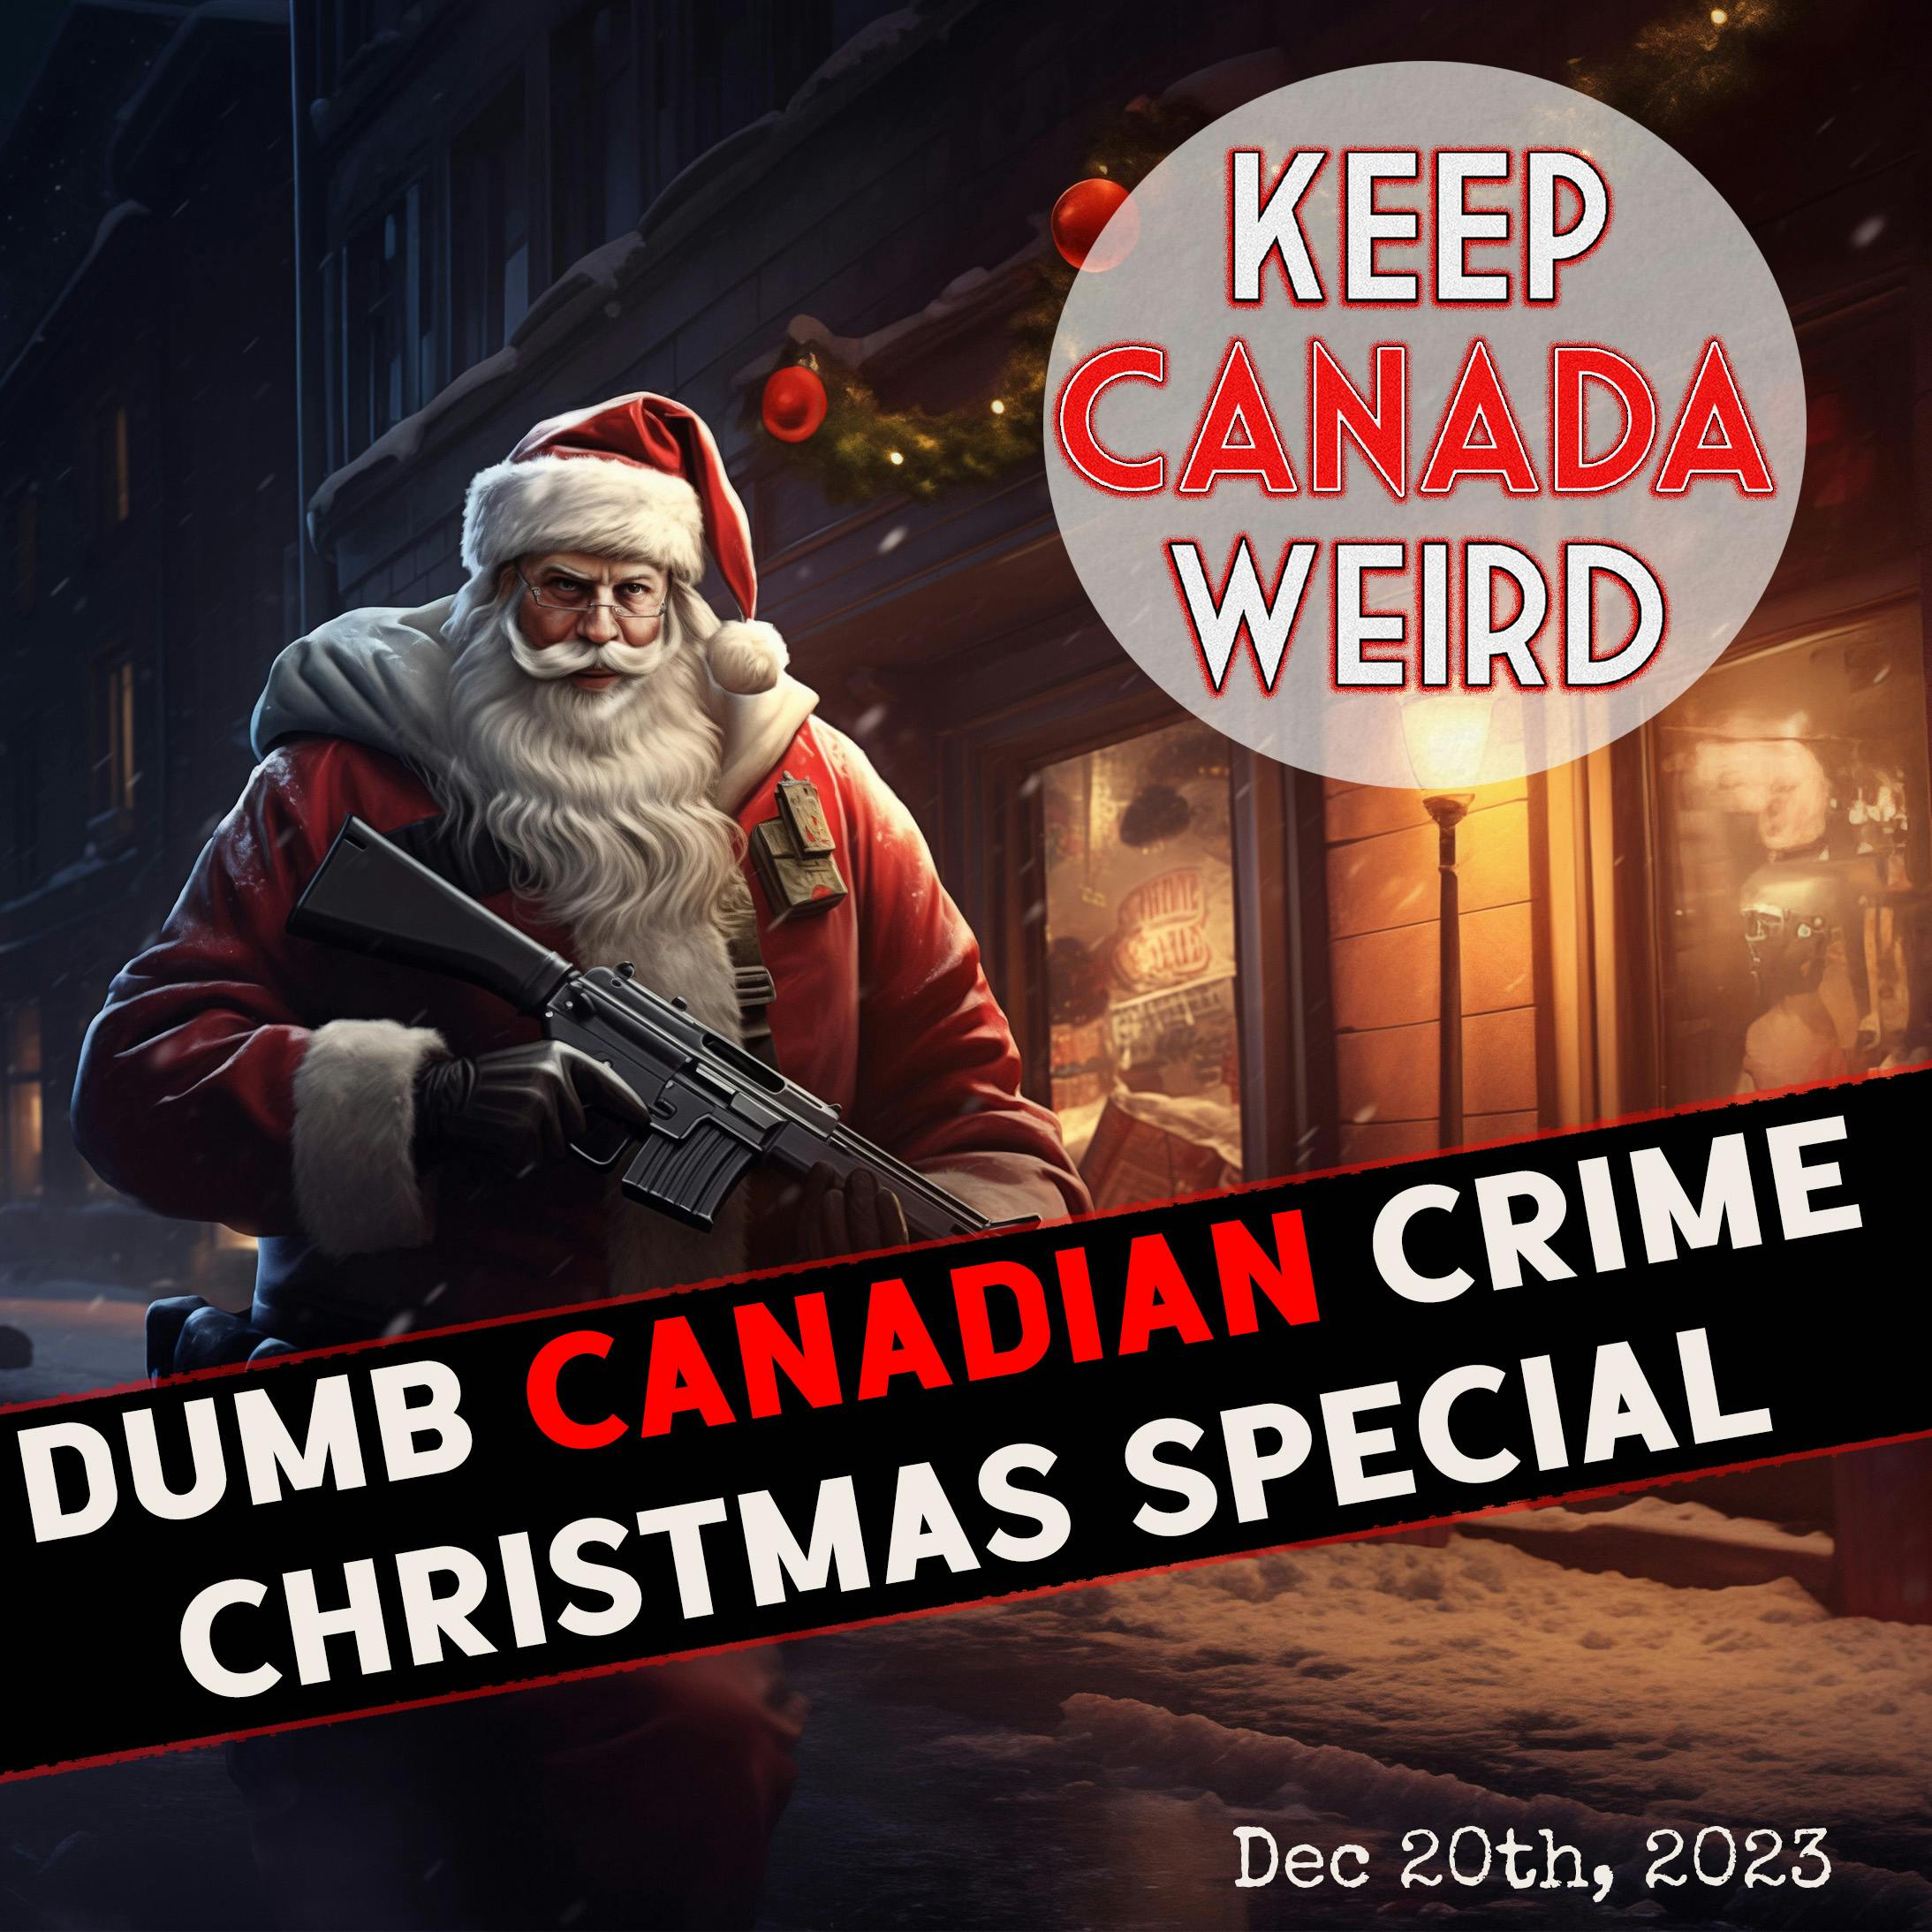 KEEP CANADA WEIRD - Dec 20th, 2023 - DUMB Canadian crime Christmas special?